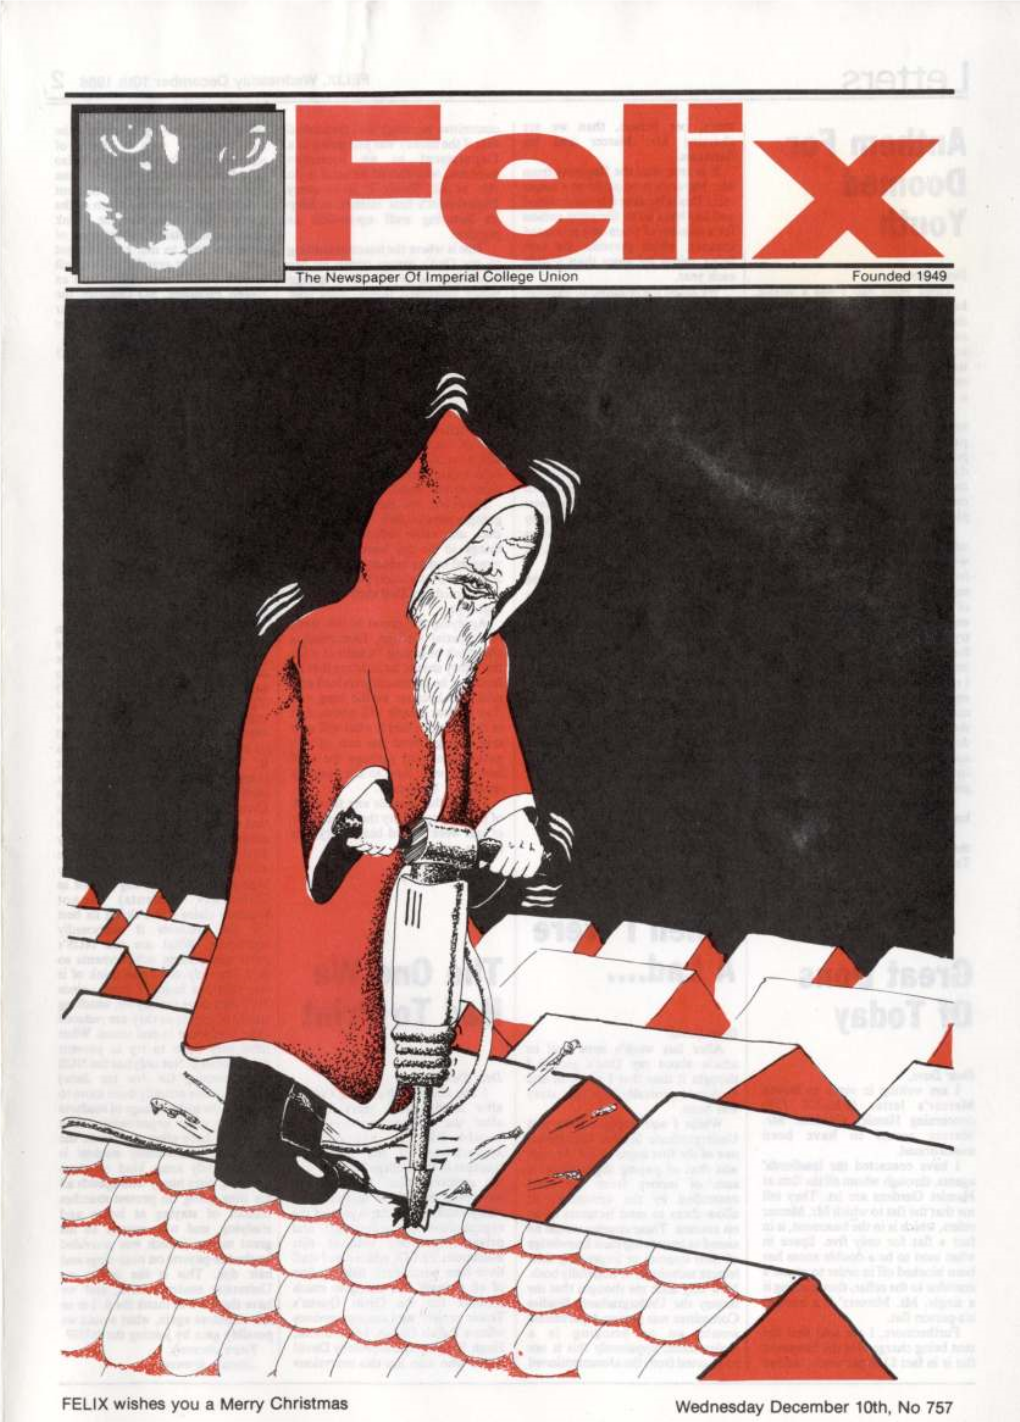 Felix Issue 725, 1986